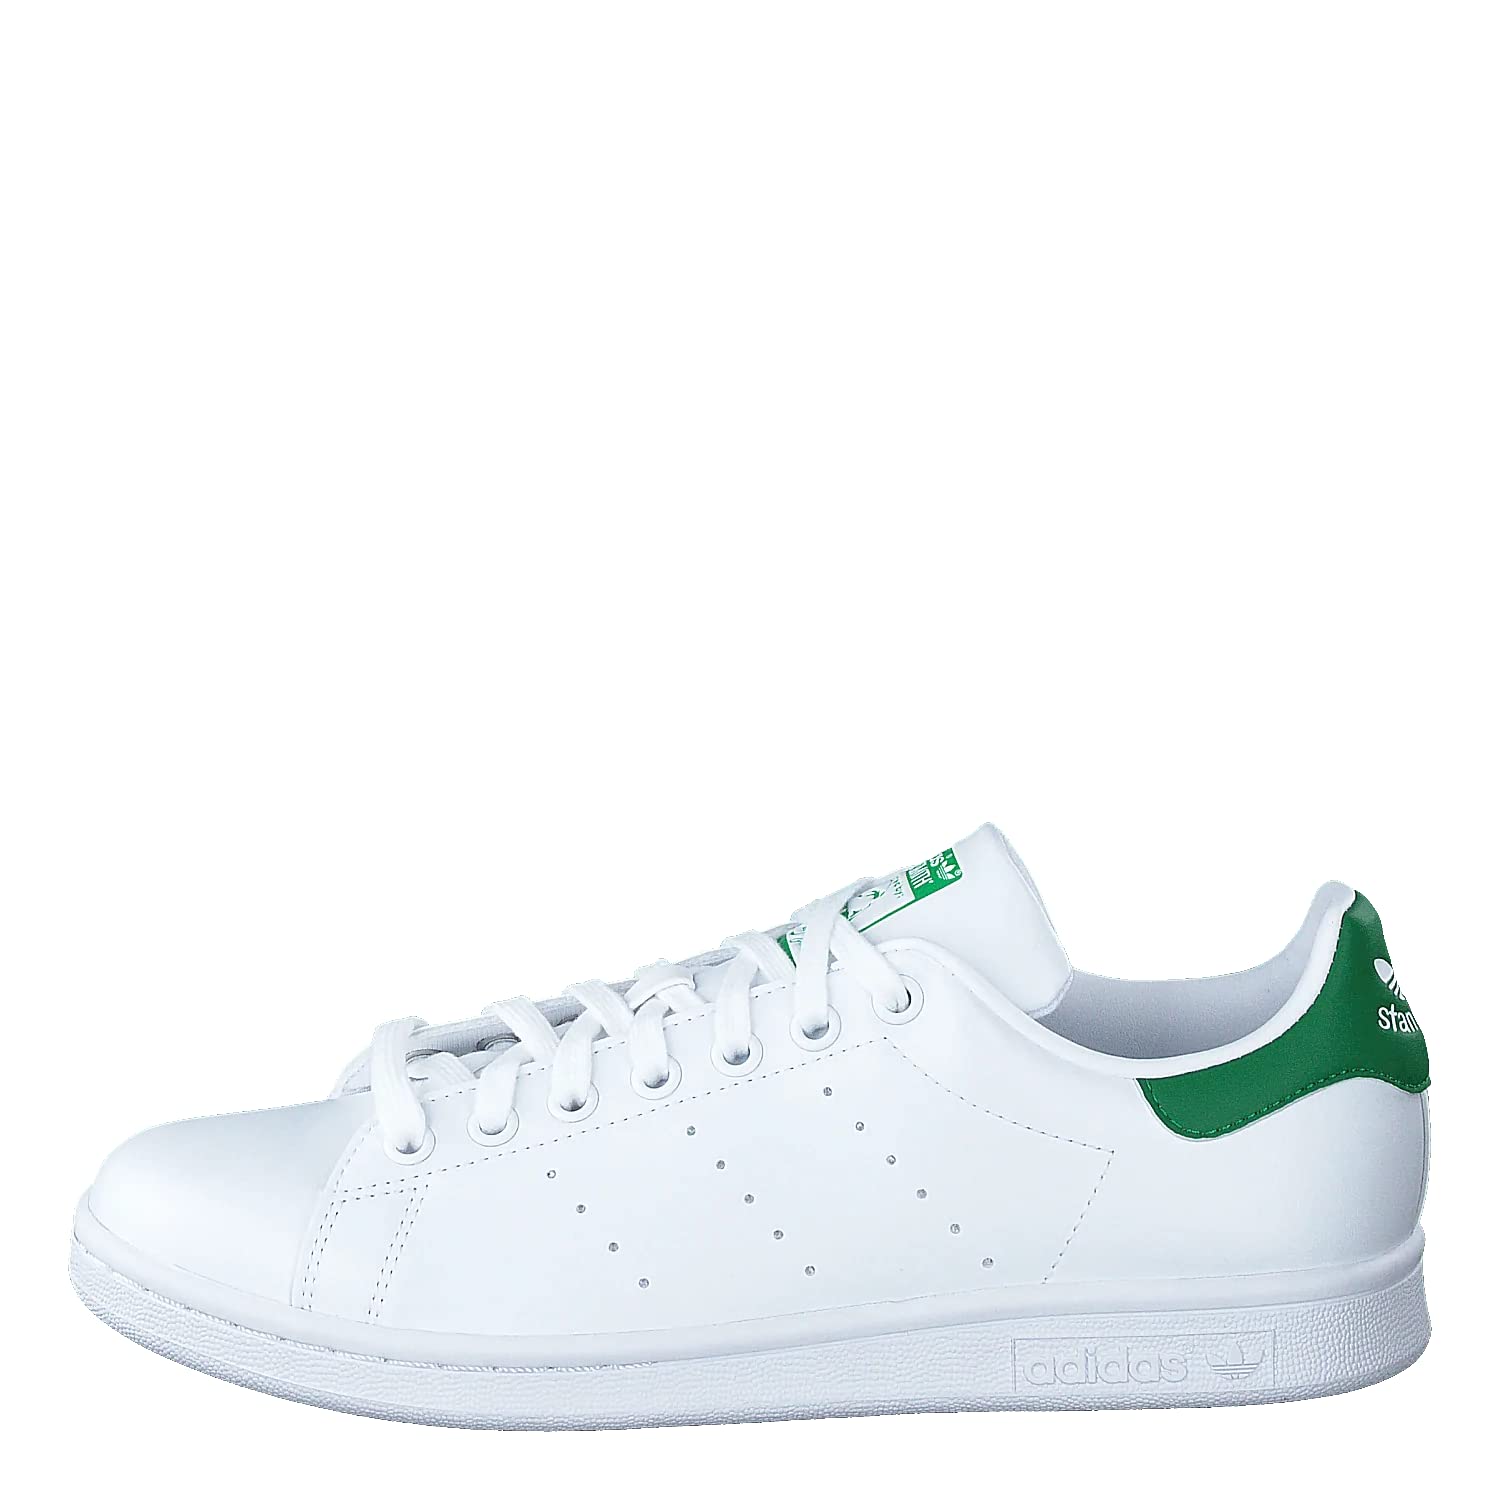 adidas originals Herren Sneakers, White, 41 1/3 EU